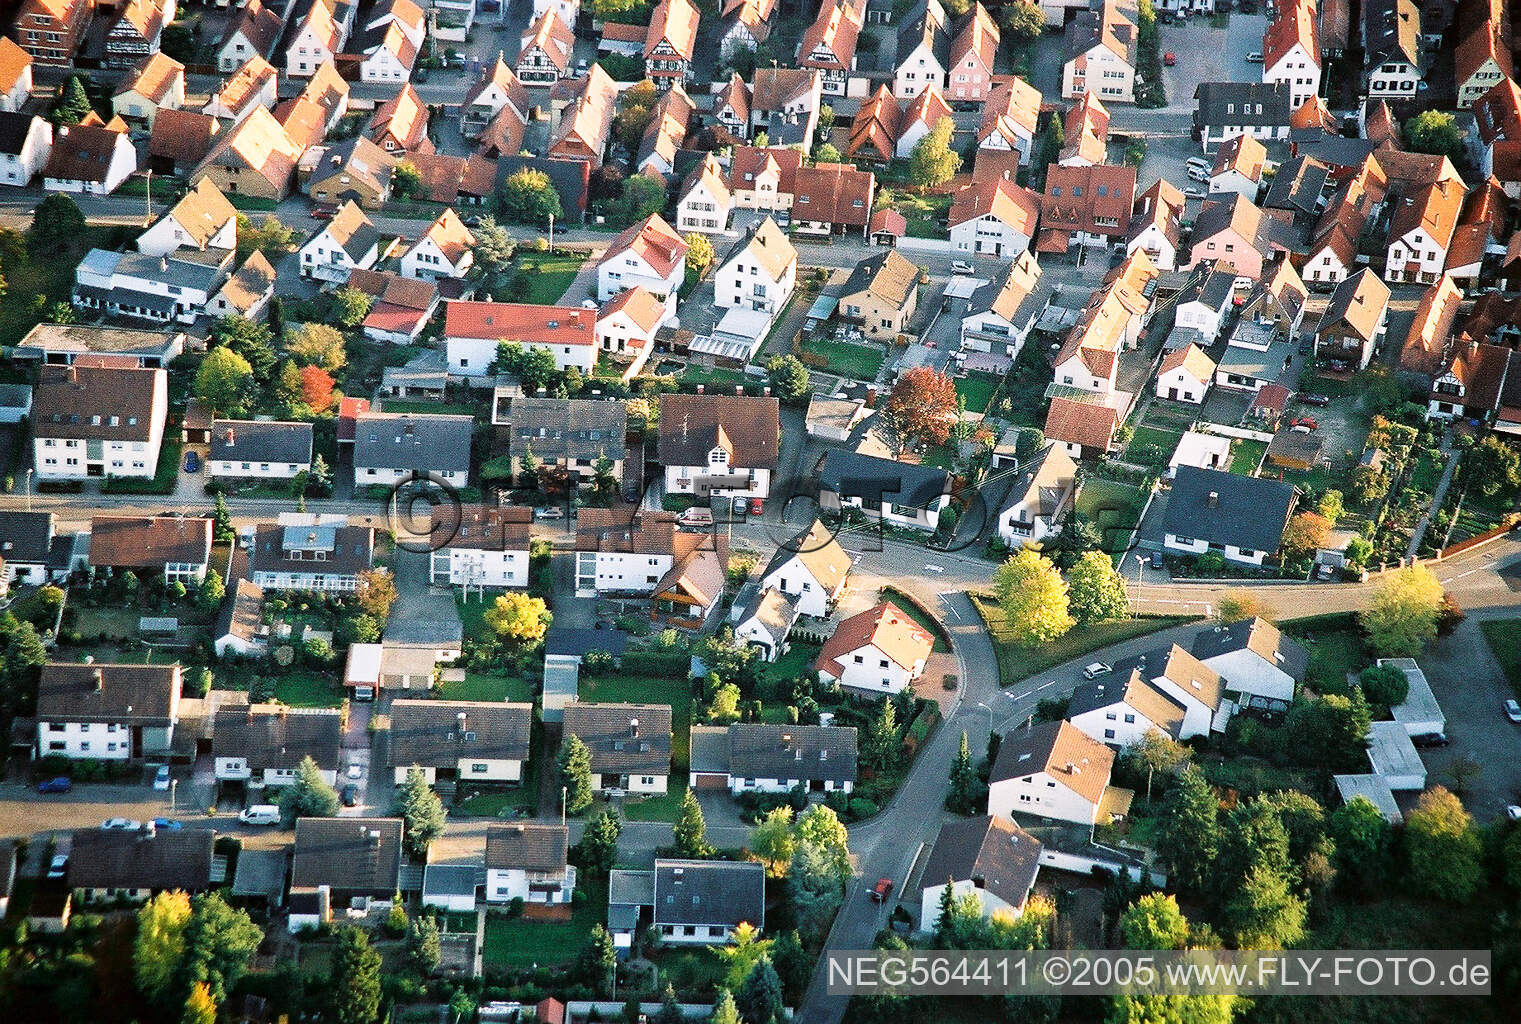 Aerial view of Robert Koch Street in Kandel in the state Rhineland-Palatinate, Germany